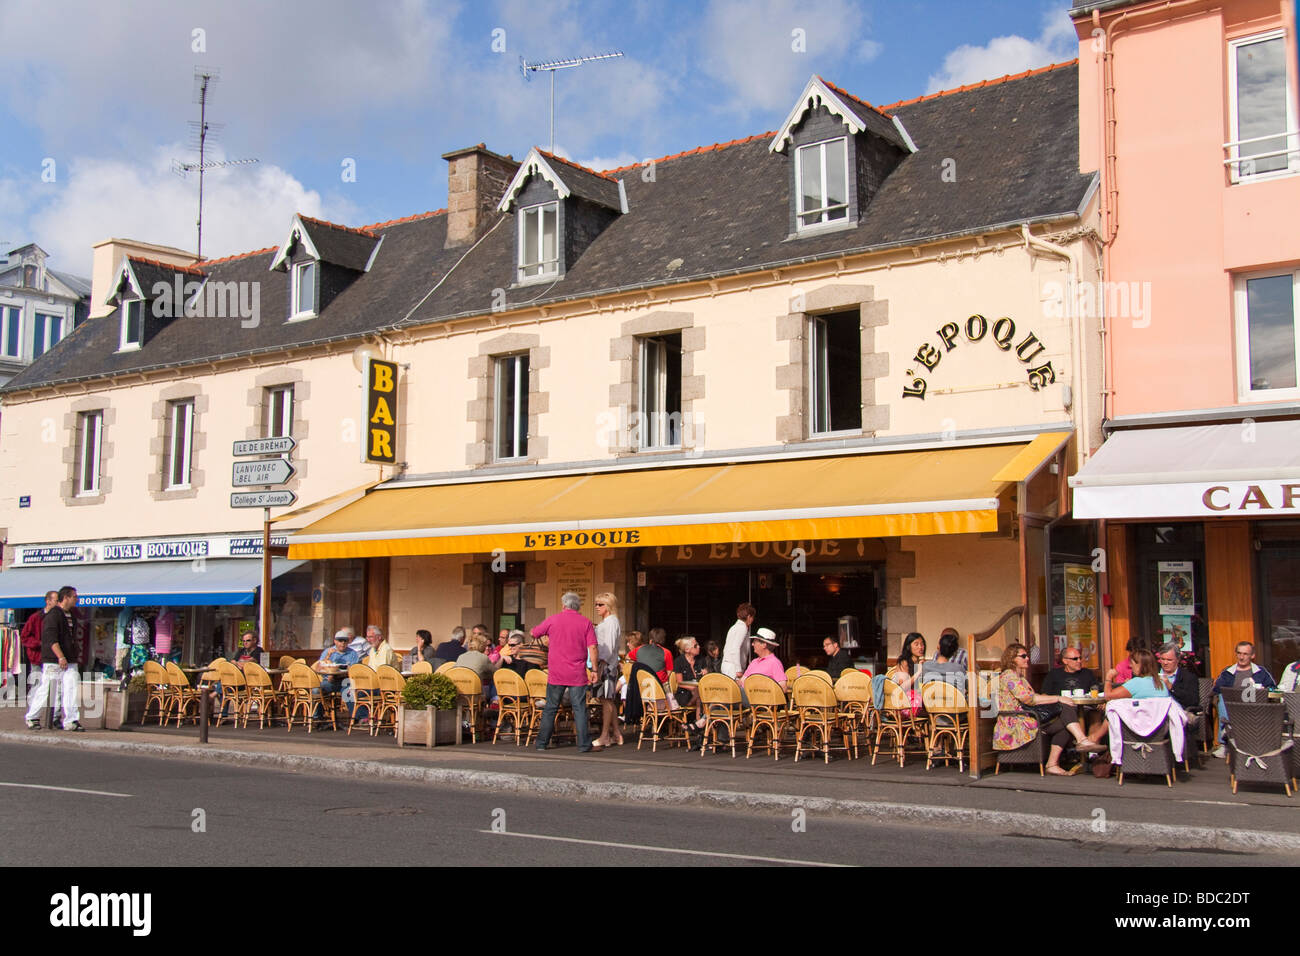 A Cafe near the harbor Paimpol, Brittany, France. Stock Photo